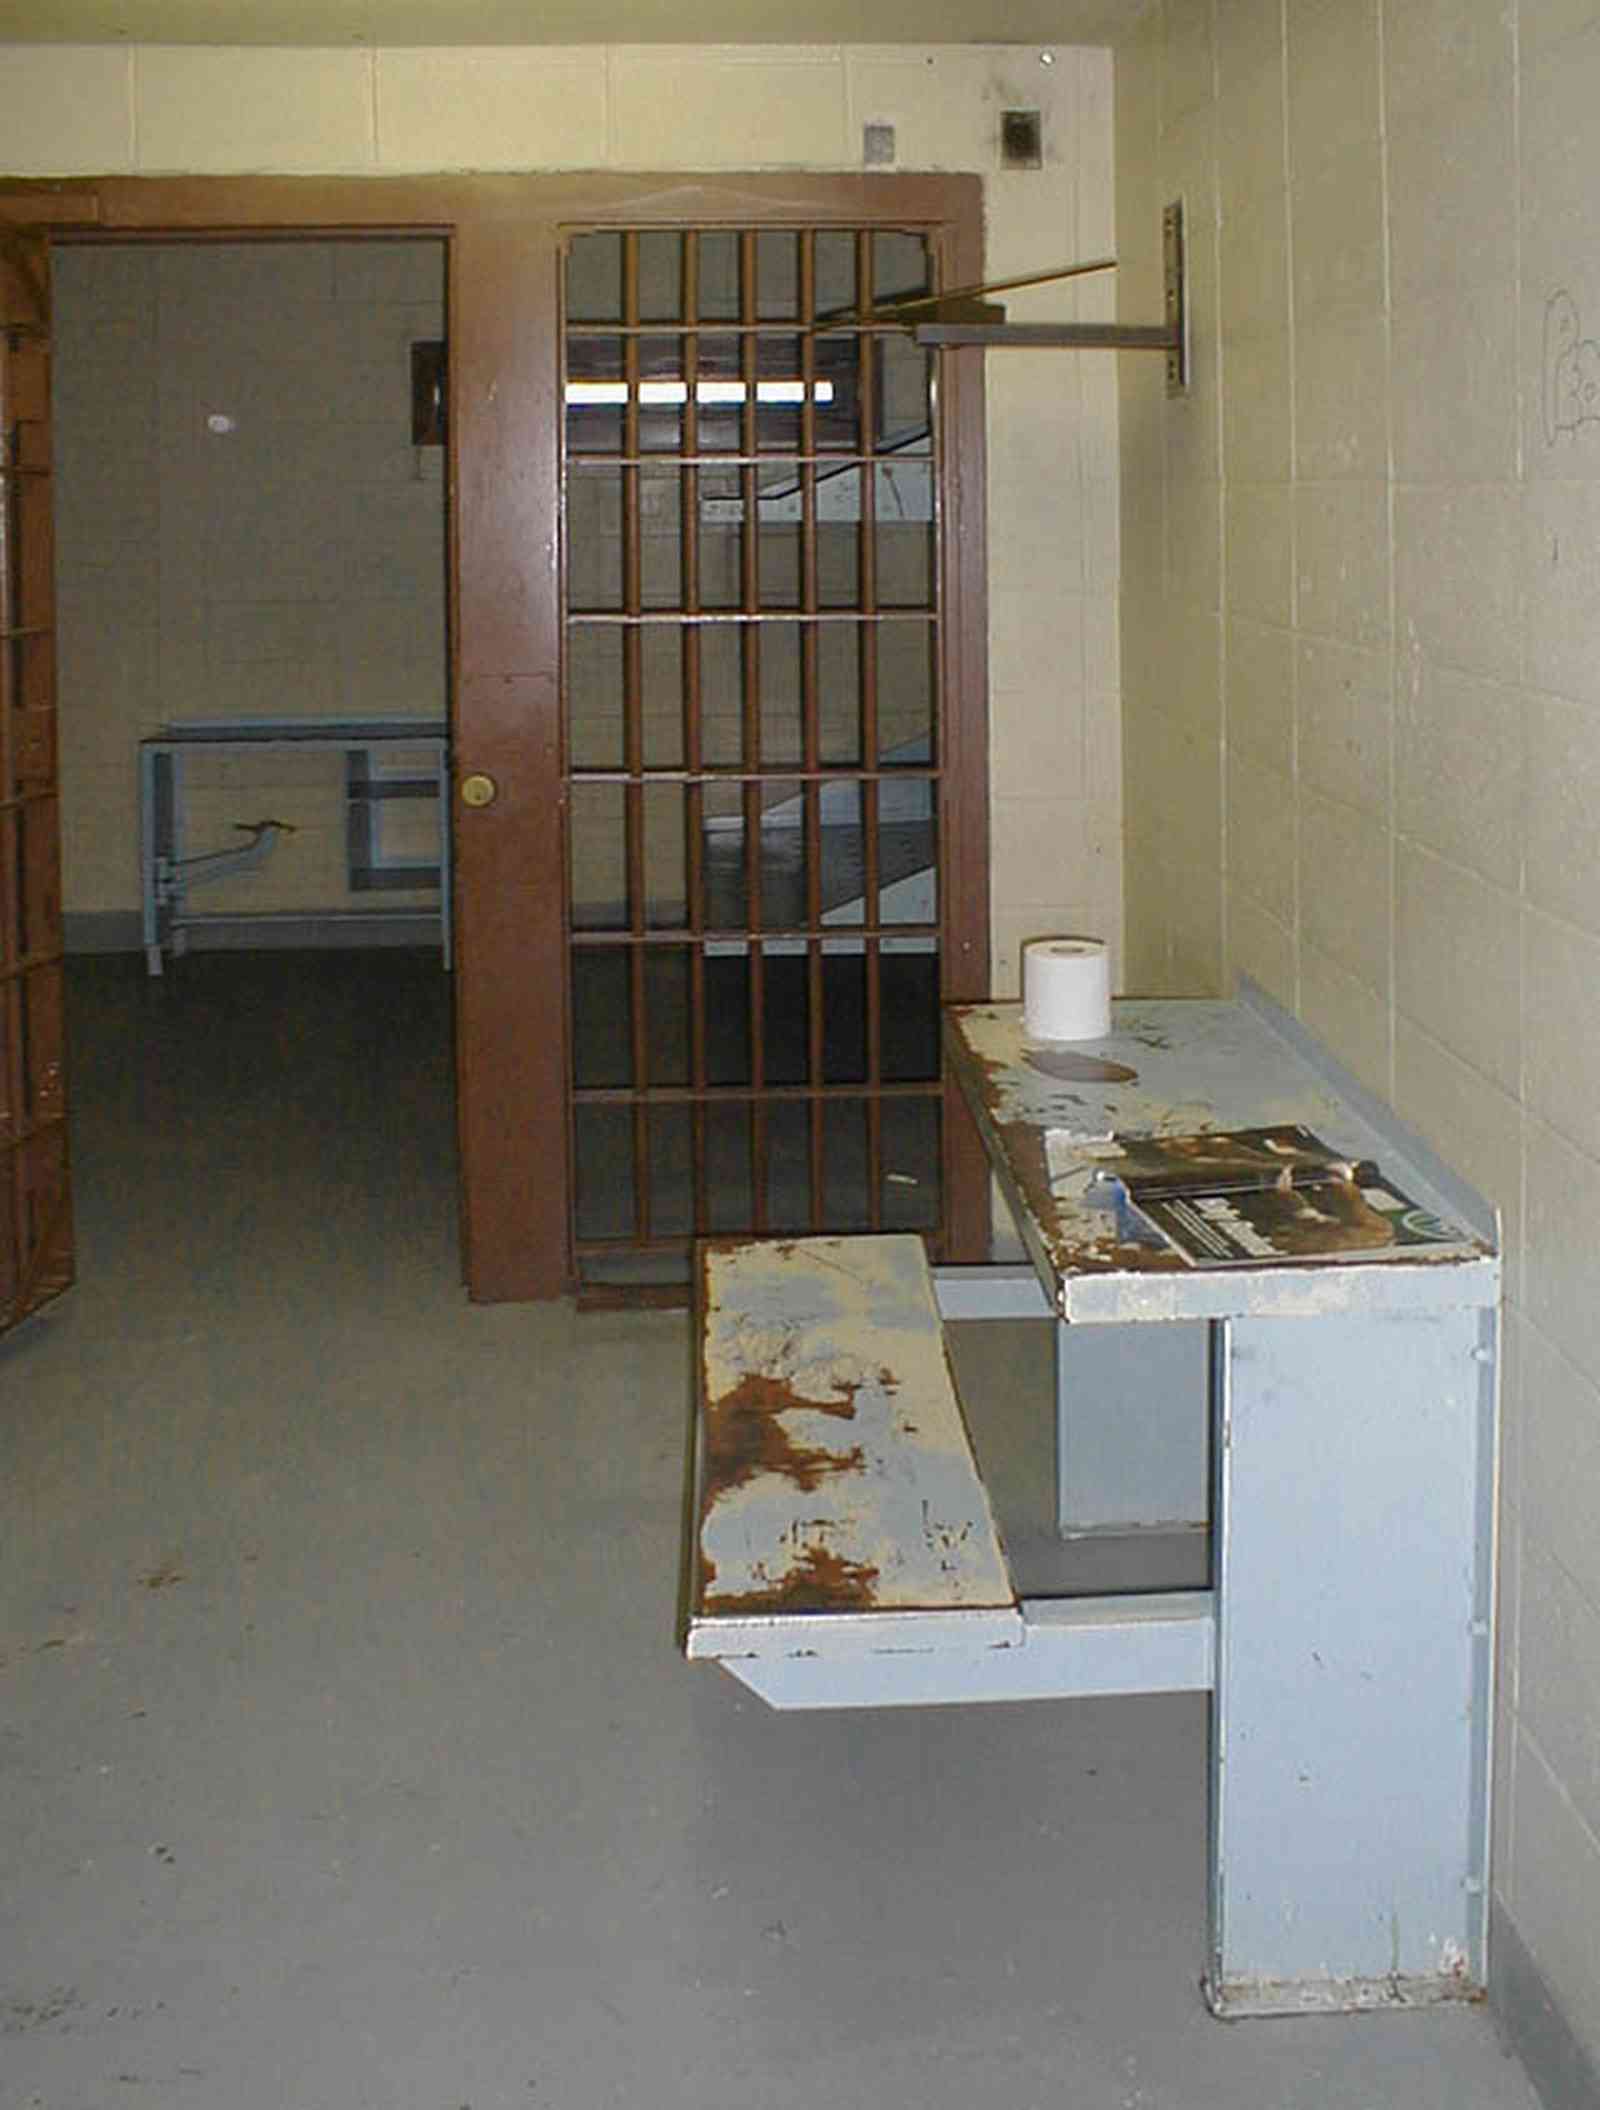 Milton:-Courthouse-Old-Jail_02a.jpg:  cell, jail, bars, prisoner, courthouse